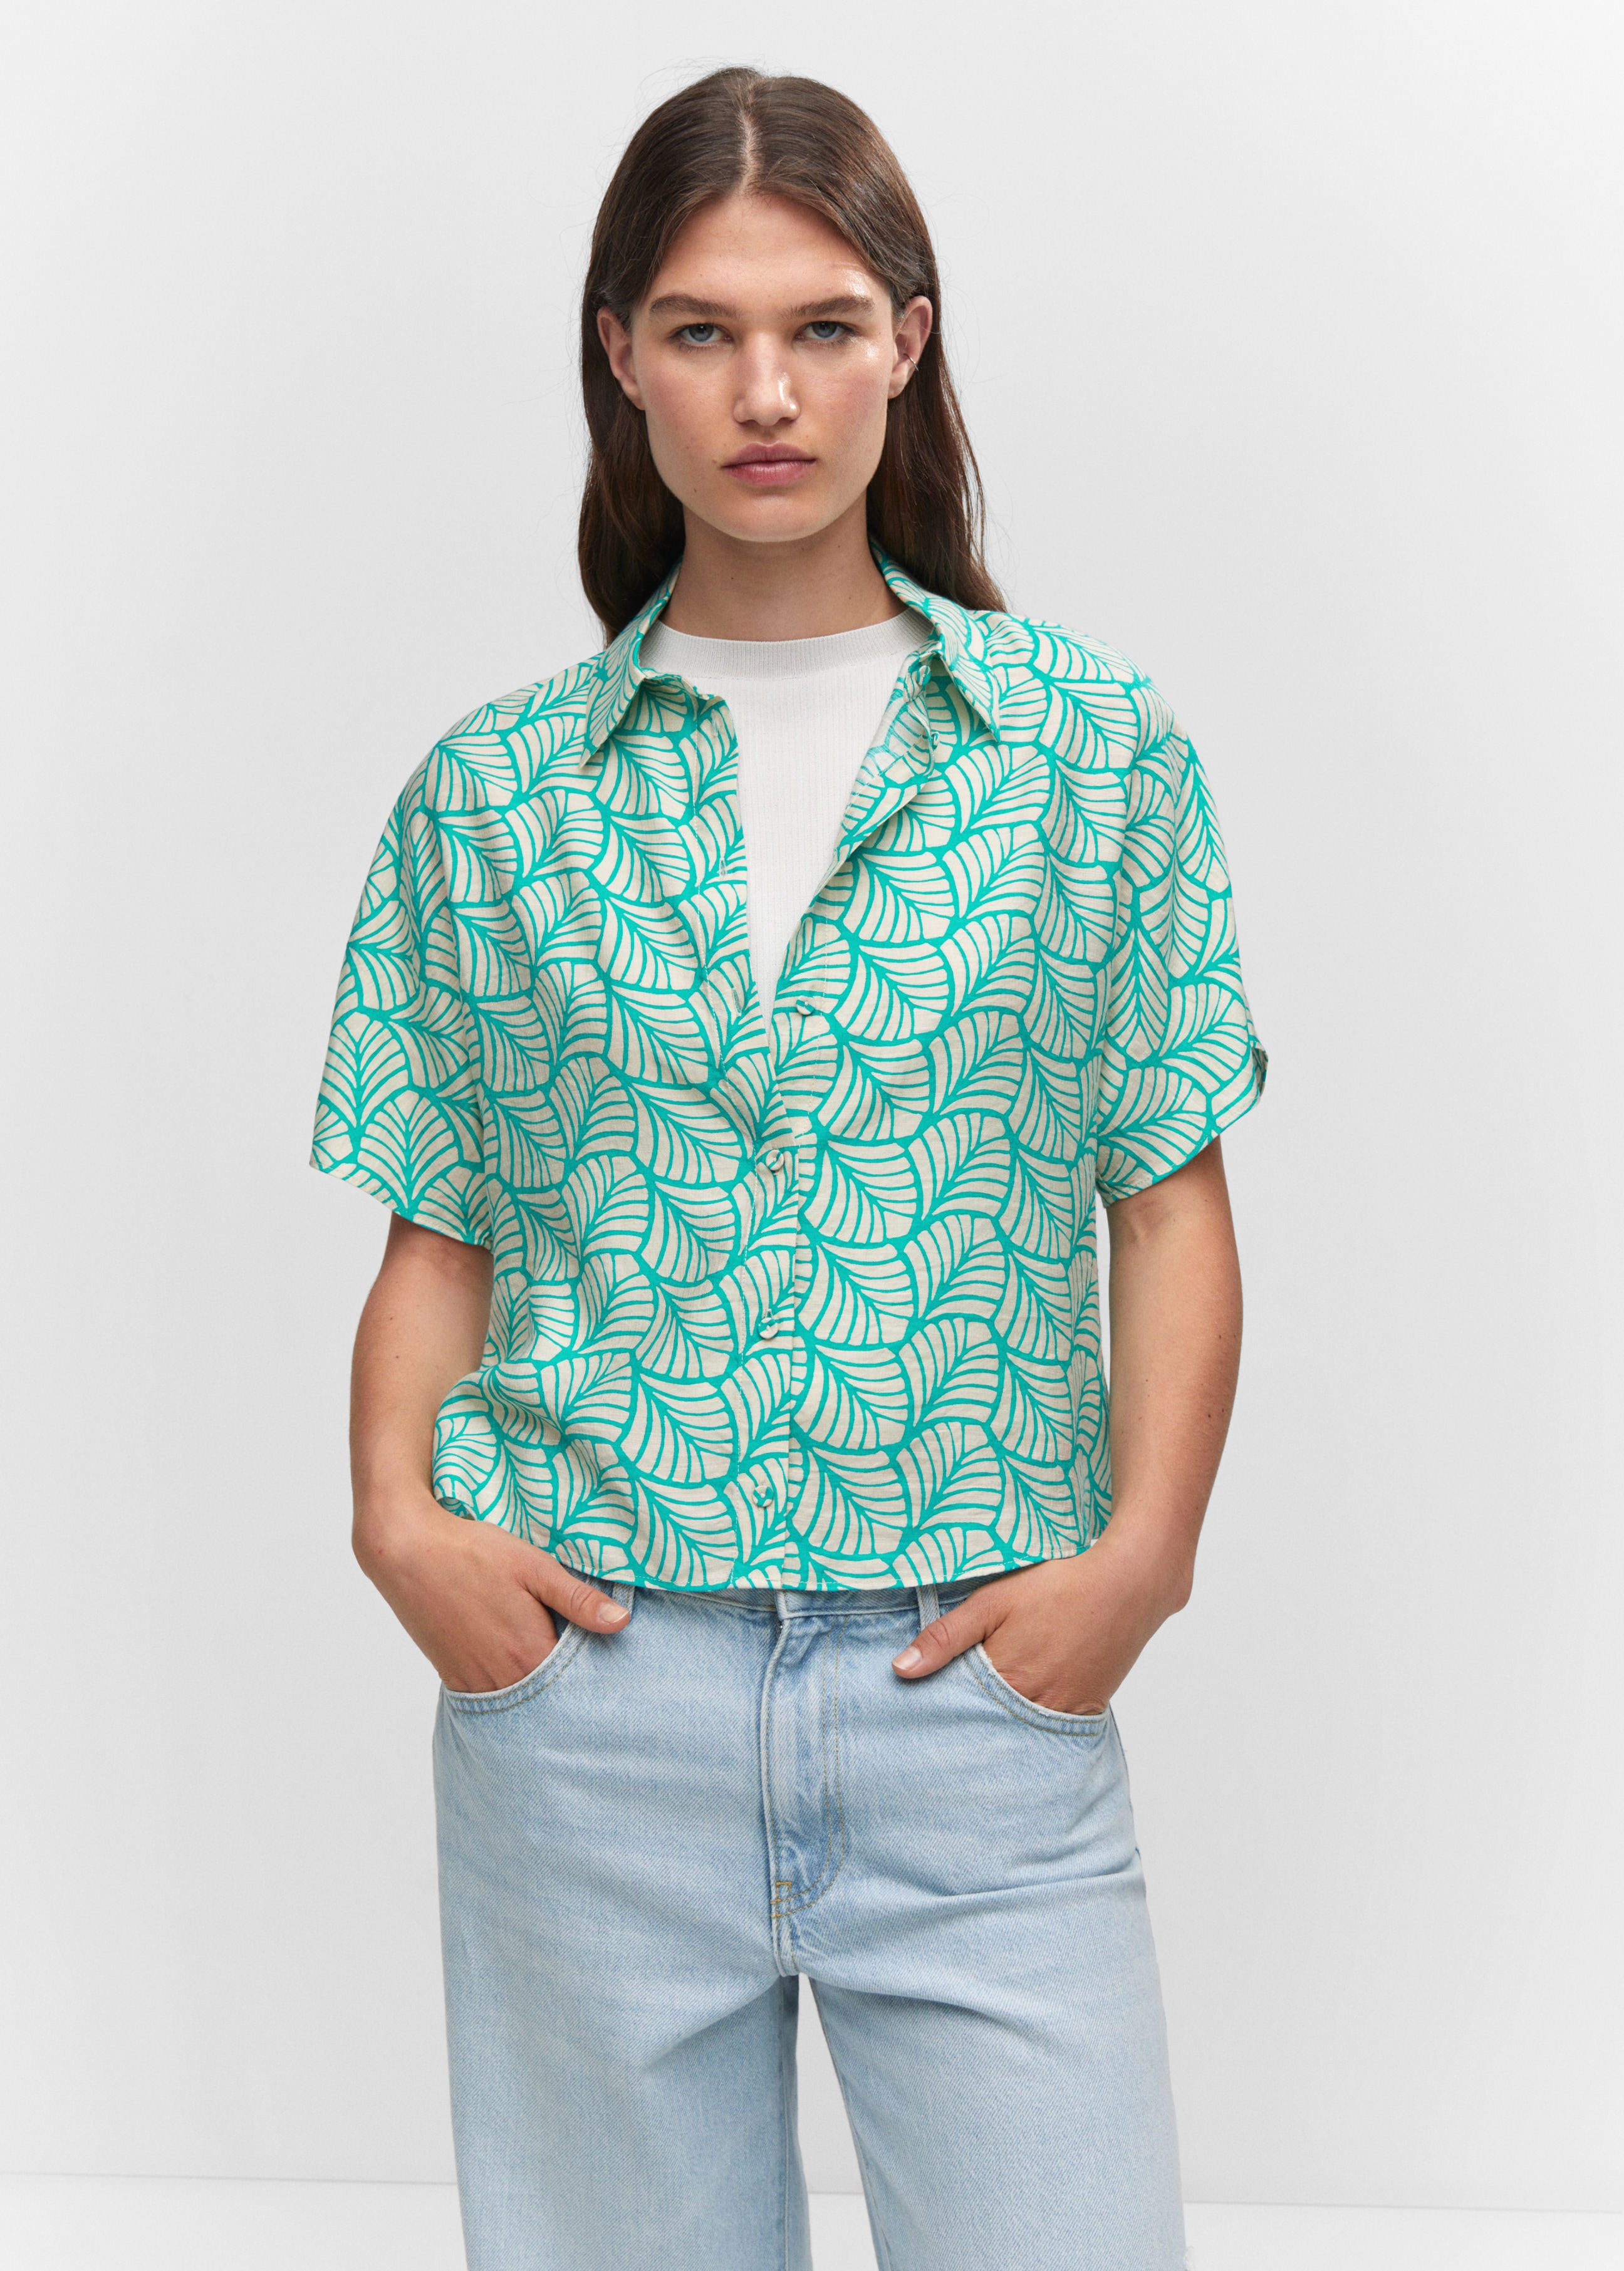 Buttoned printed shirt - Medium plane